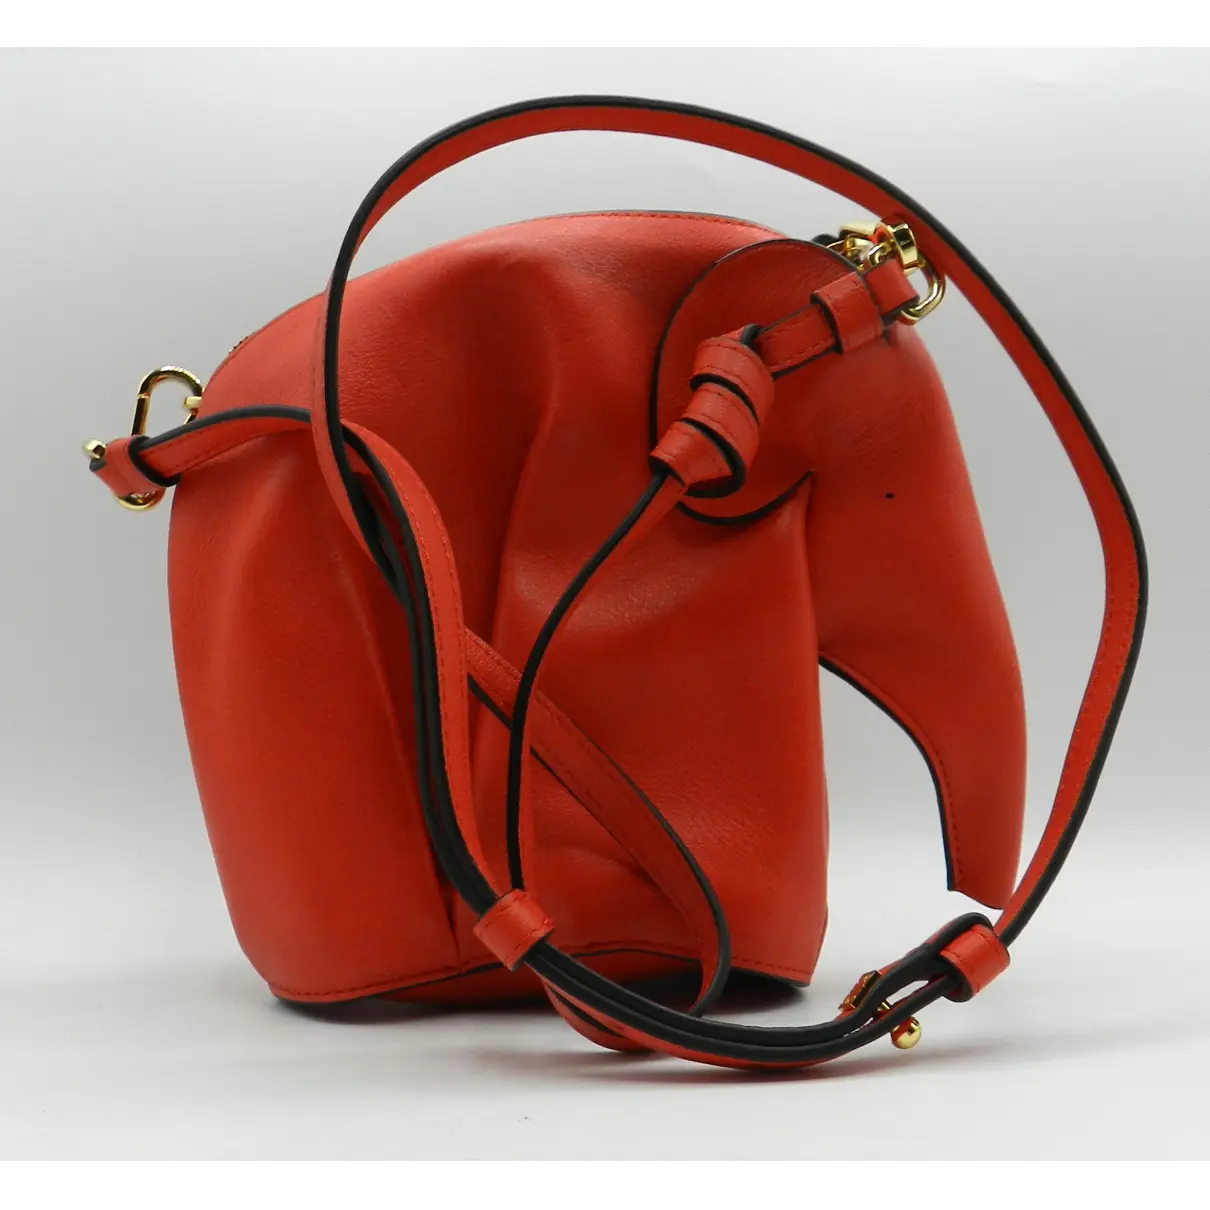 Buy Loewe Animals leather mini bag online